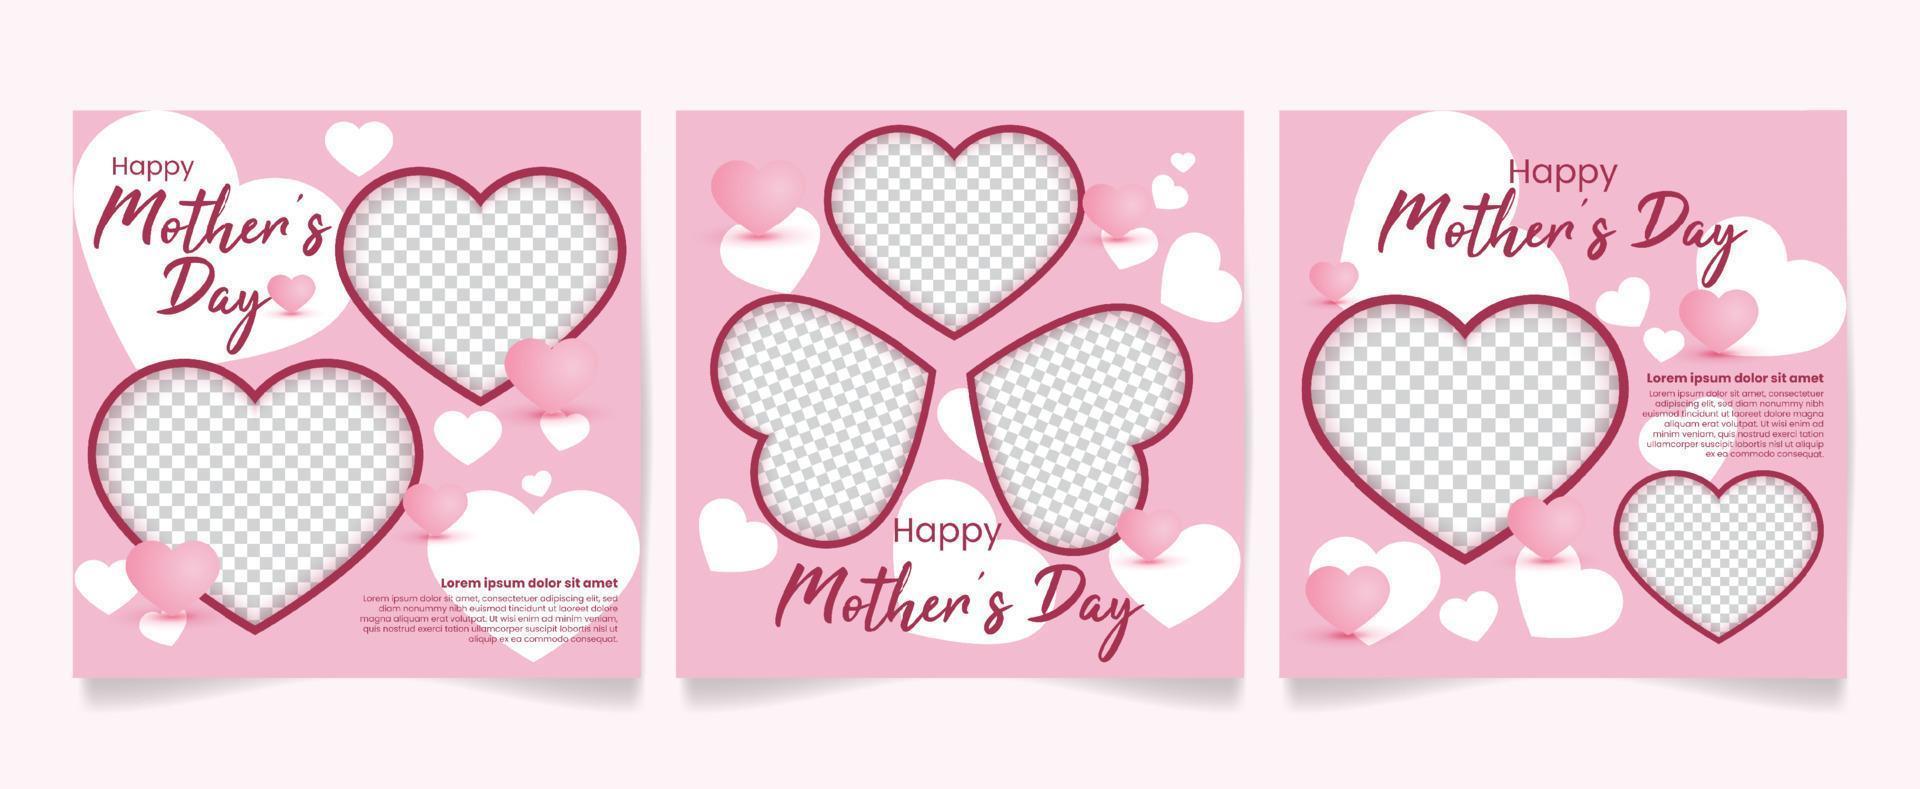 gelukkige moederdag social media postsjabloon roze kleur met liefdessymbool vector